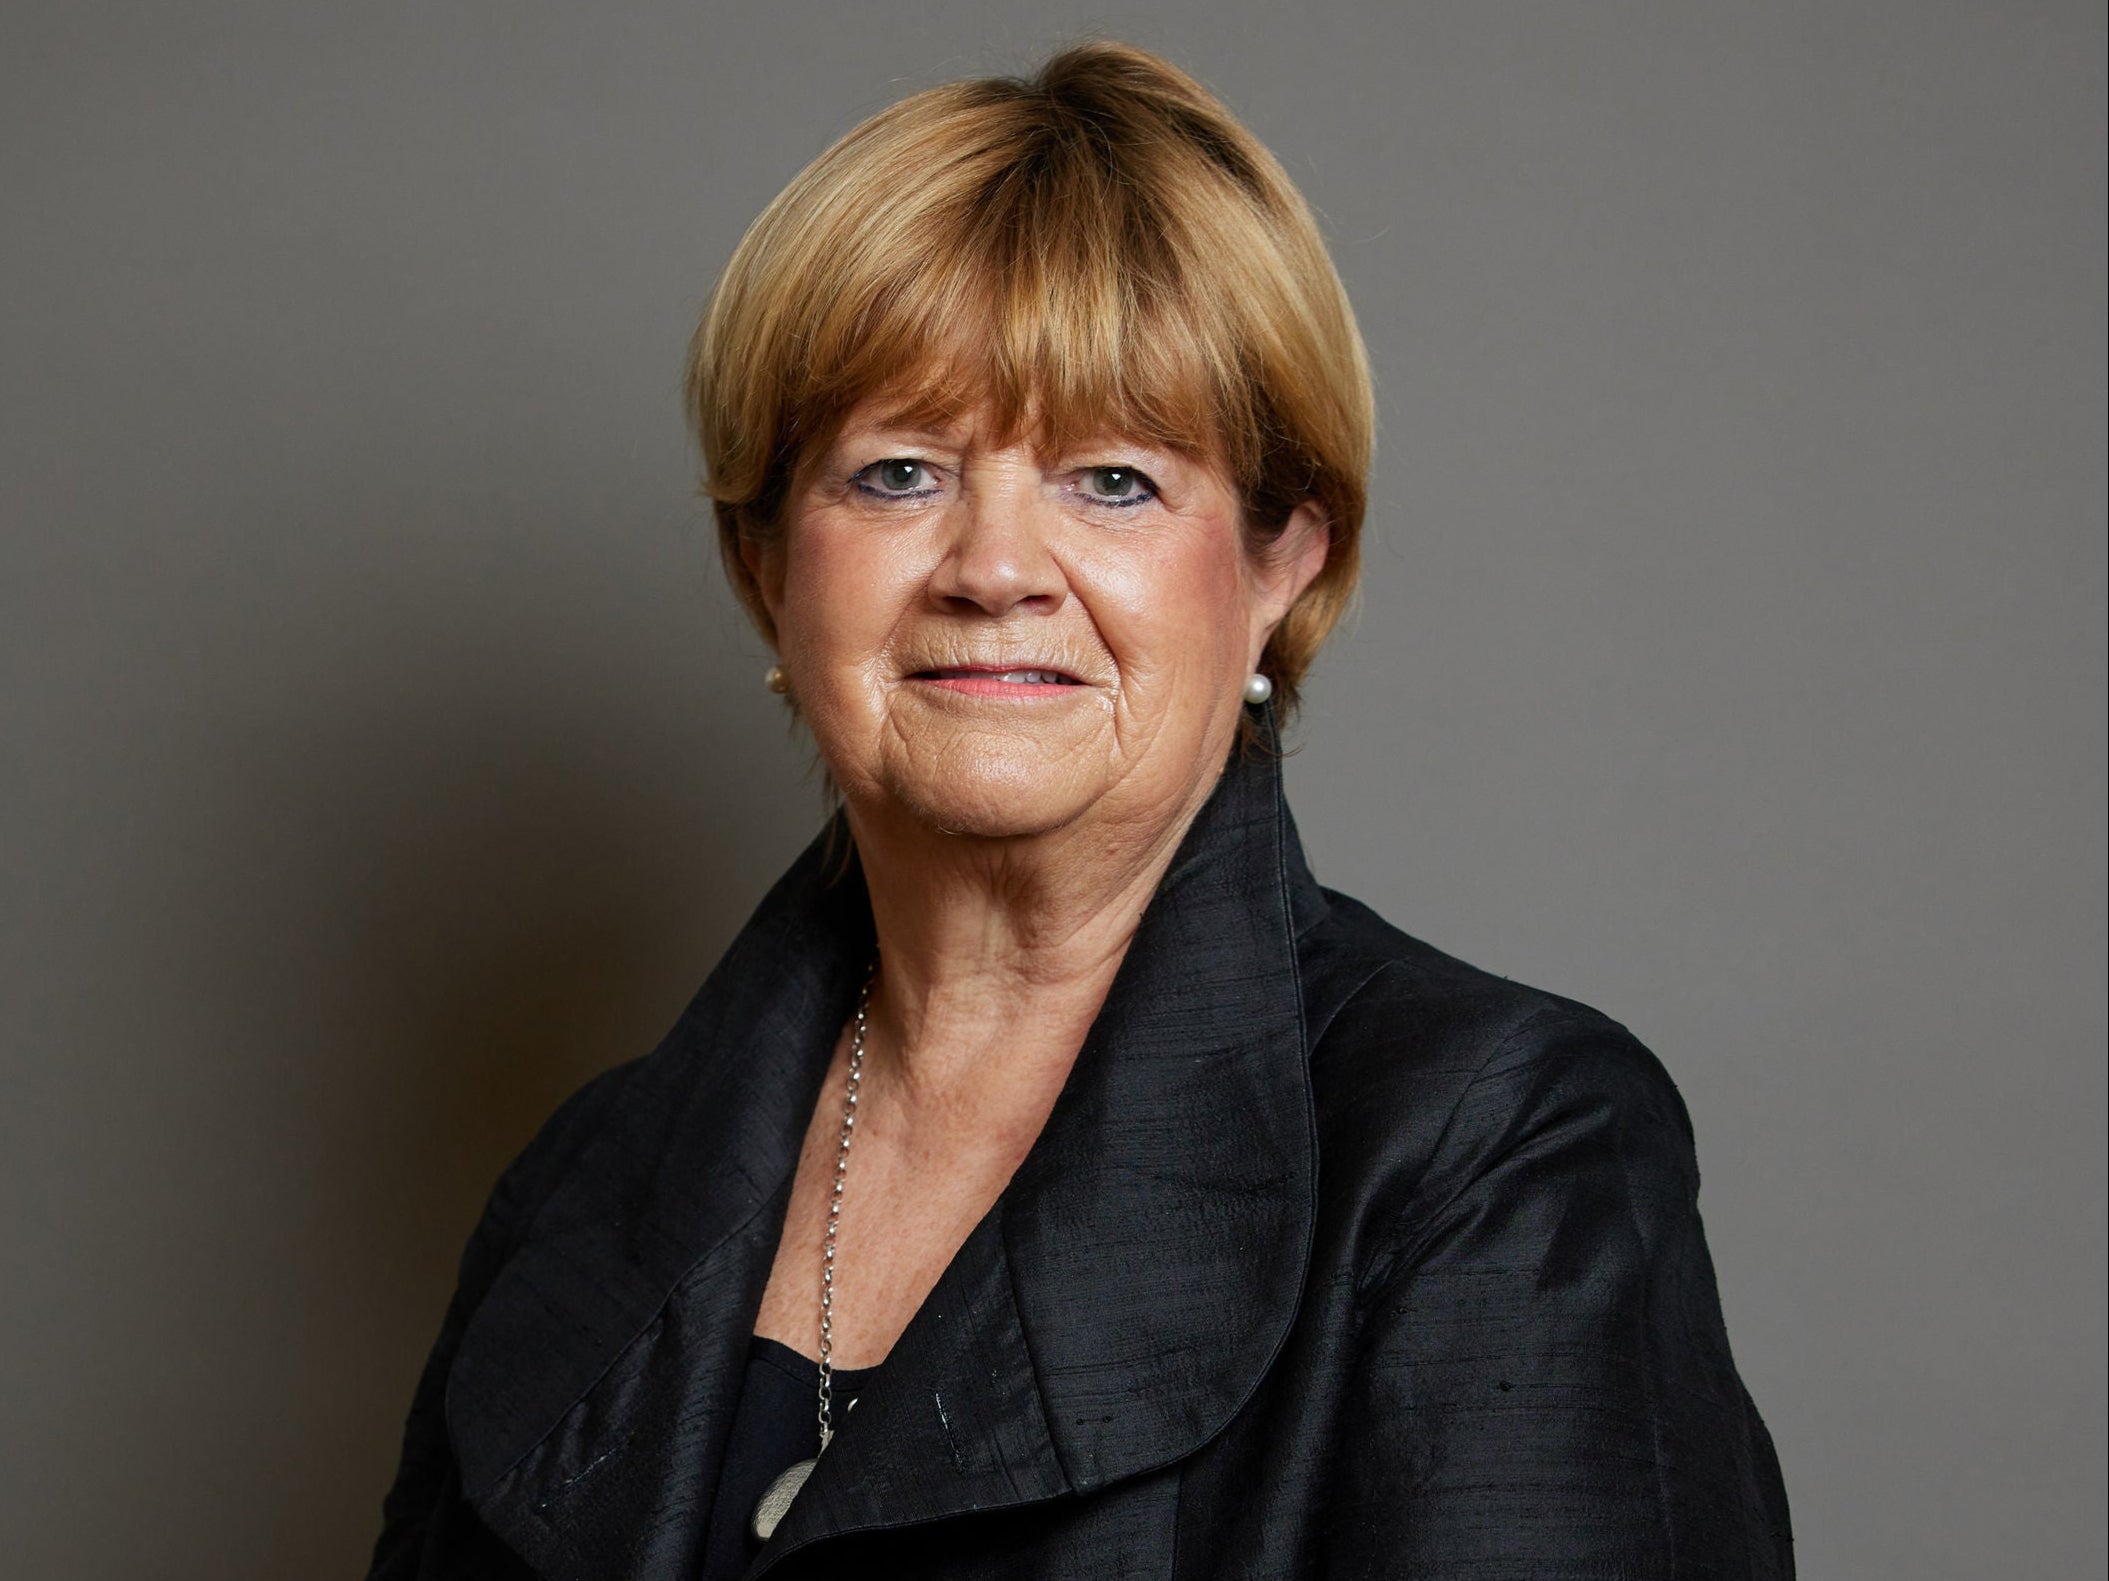 Baroness Hallett is a former high-court judge